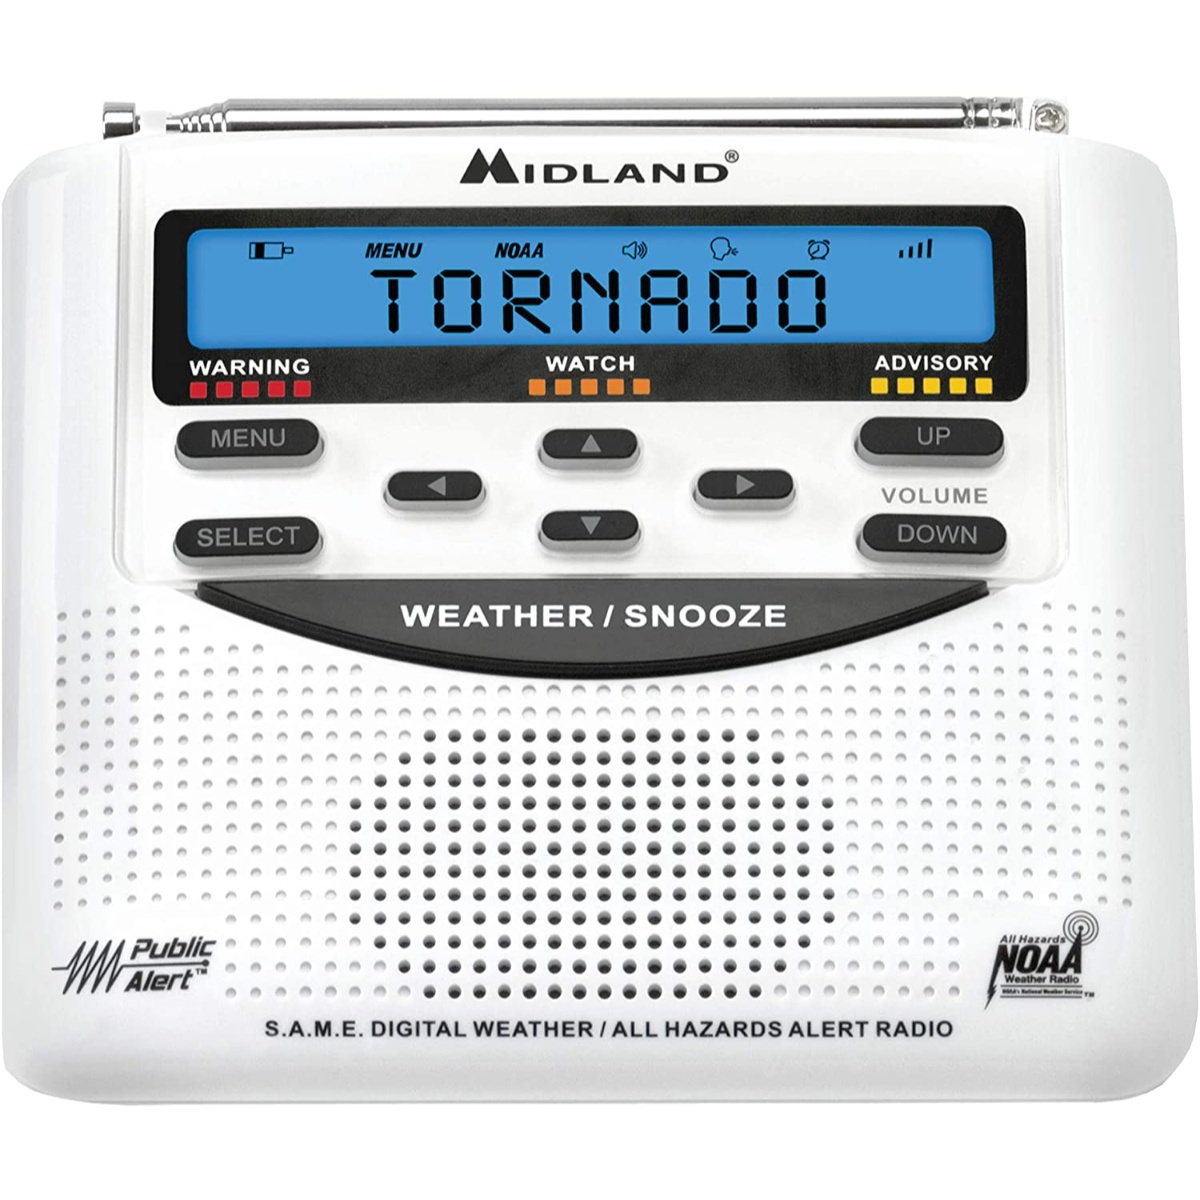 Midland WR120 NOAA Weather Alert Radio